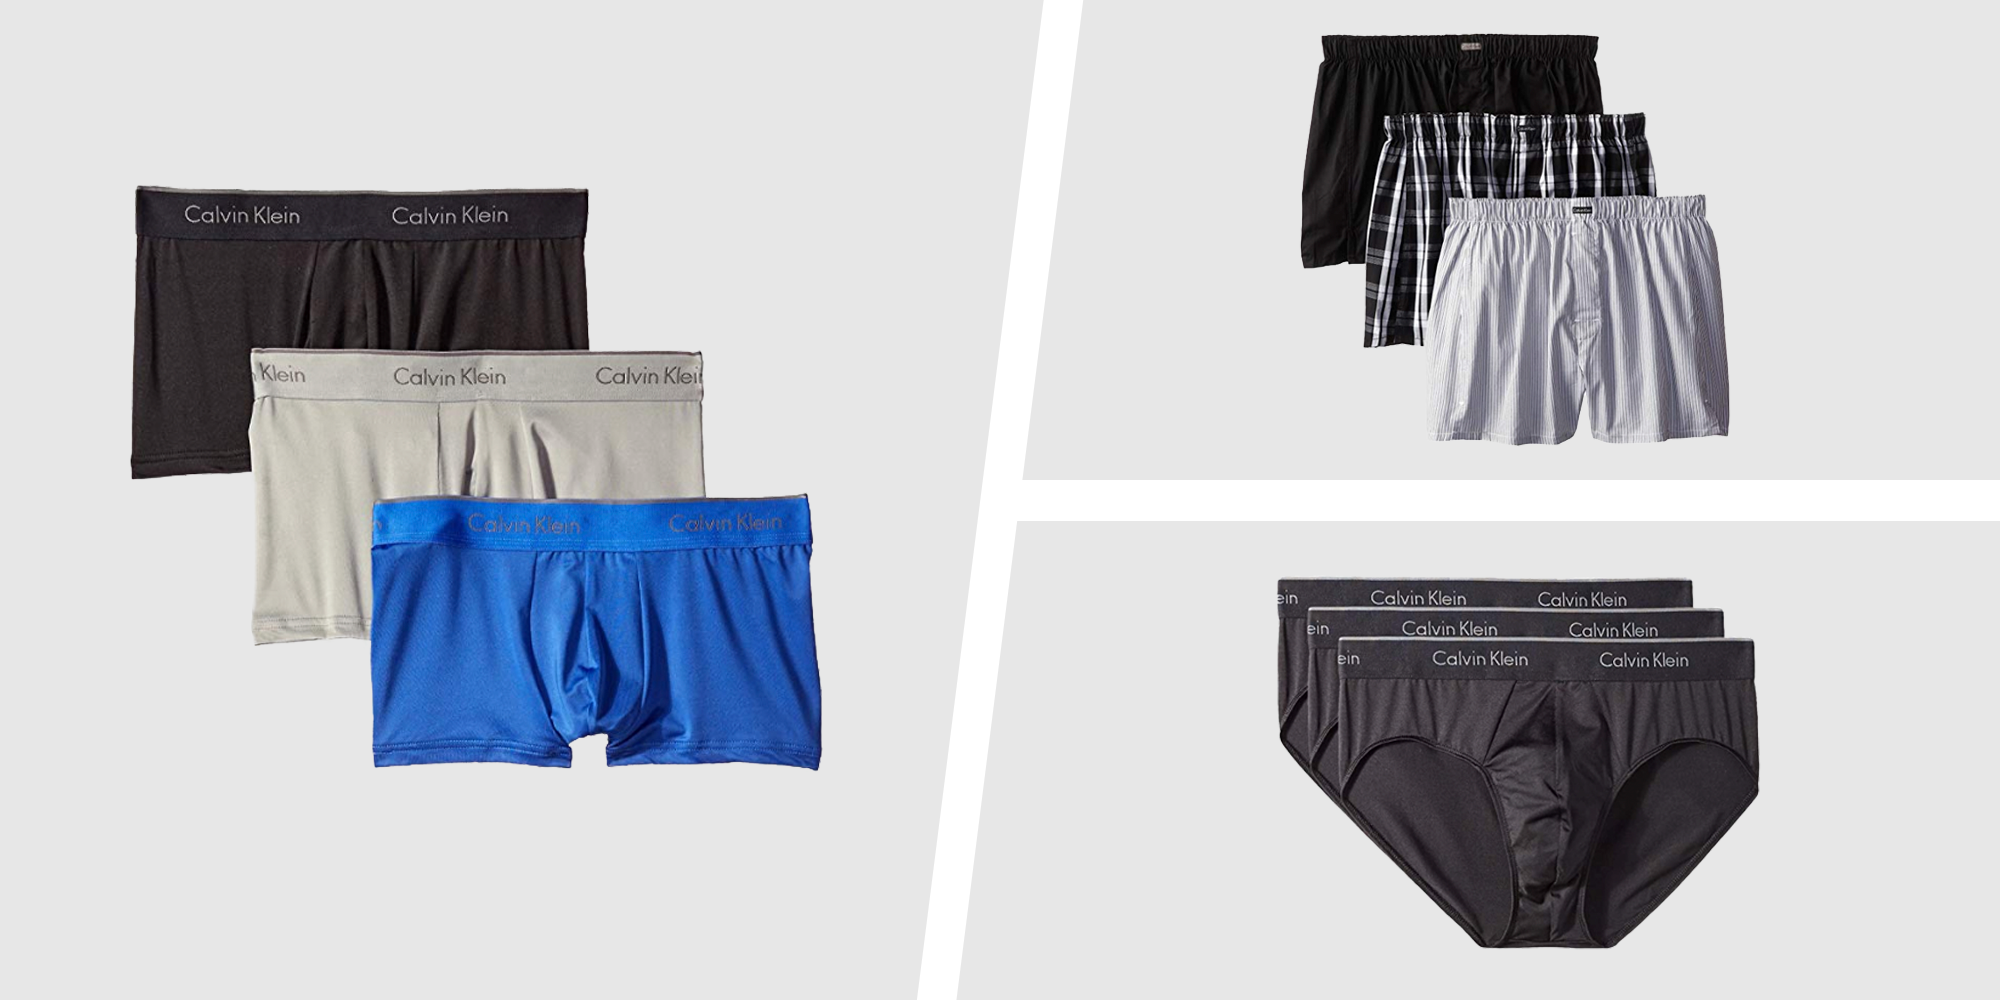 Amazon Is Having a Huge Sale on Calvin Klein Men's Underwear